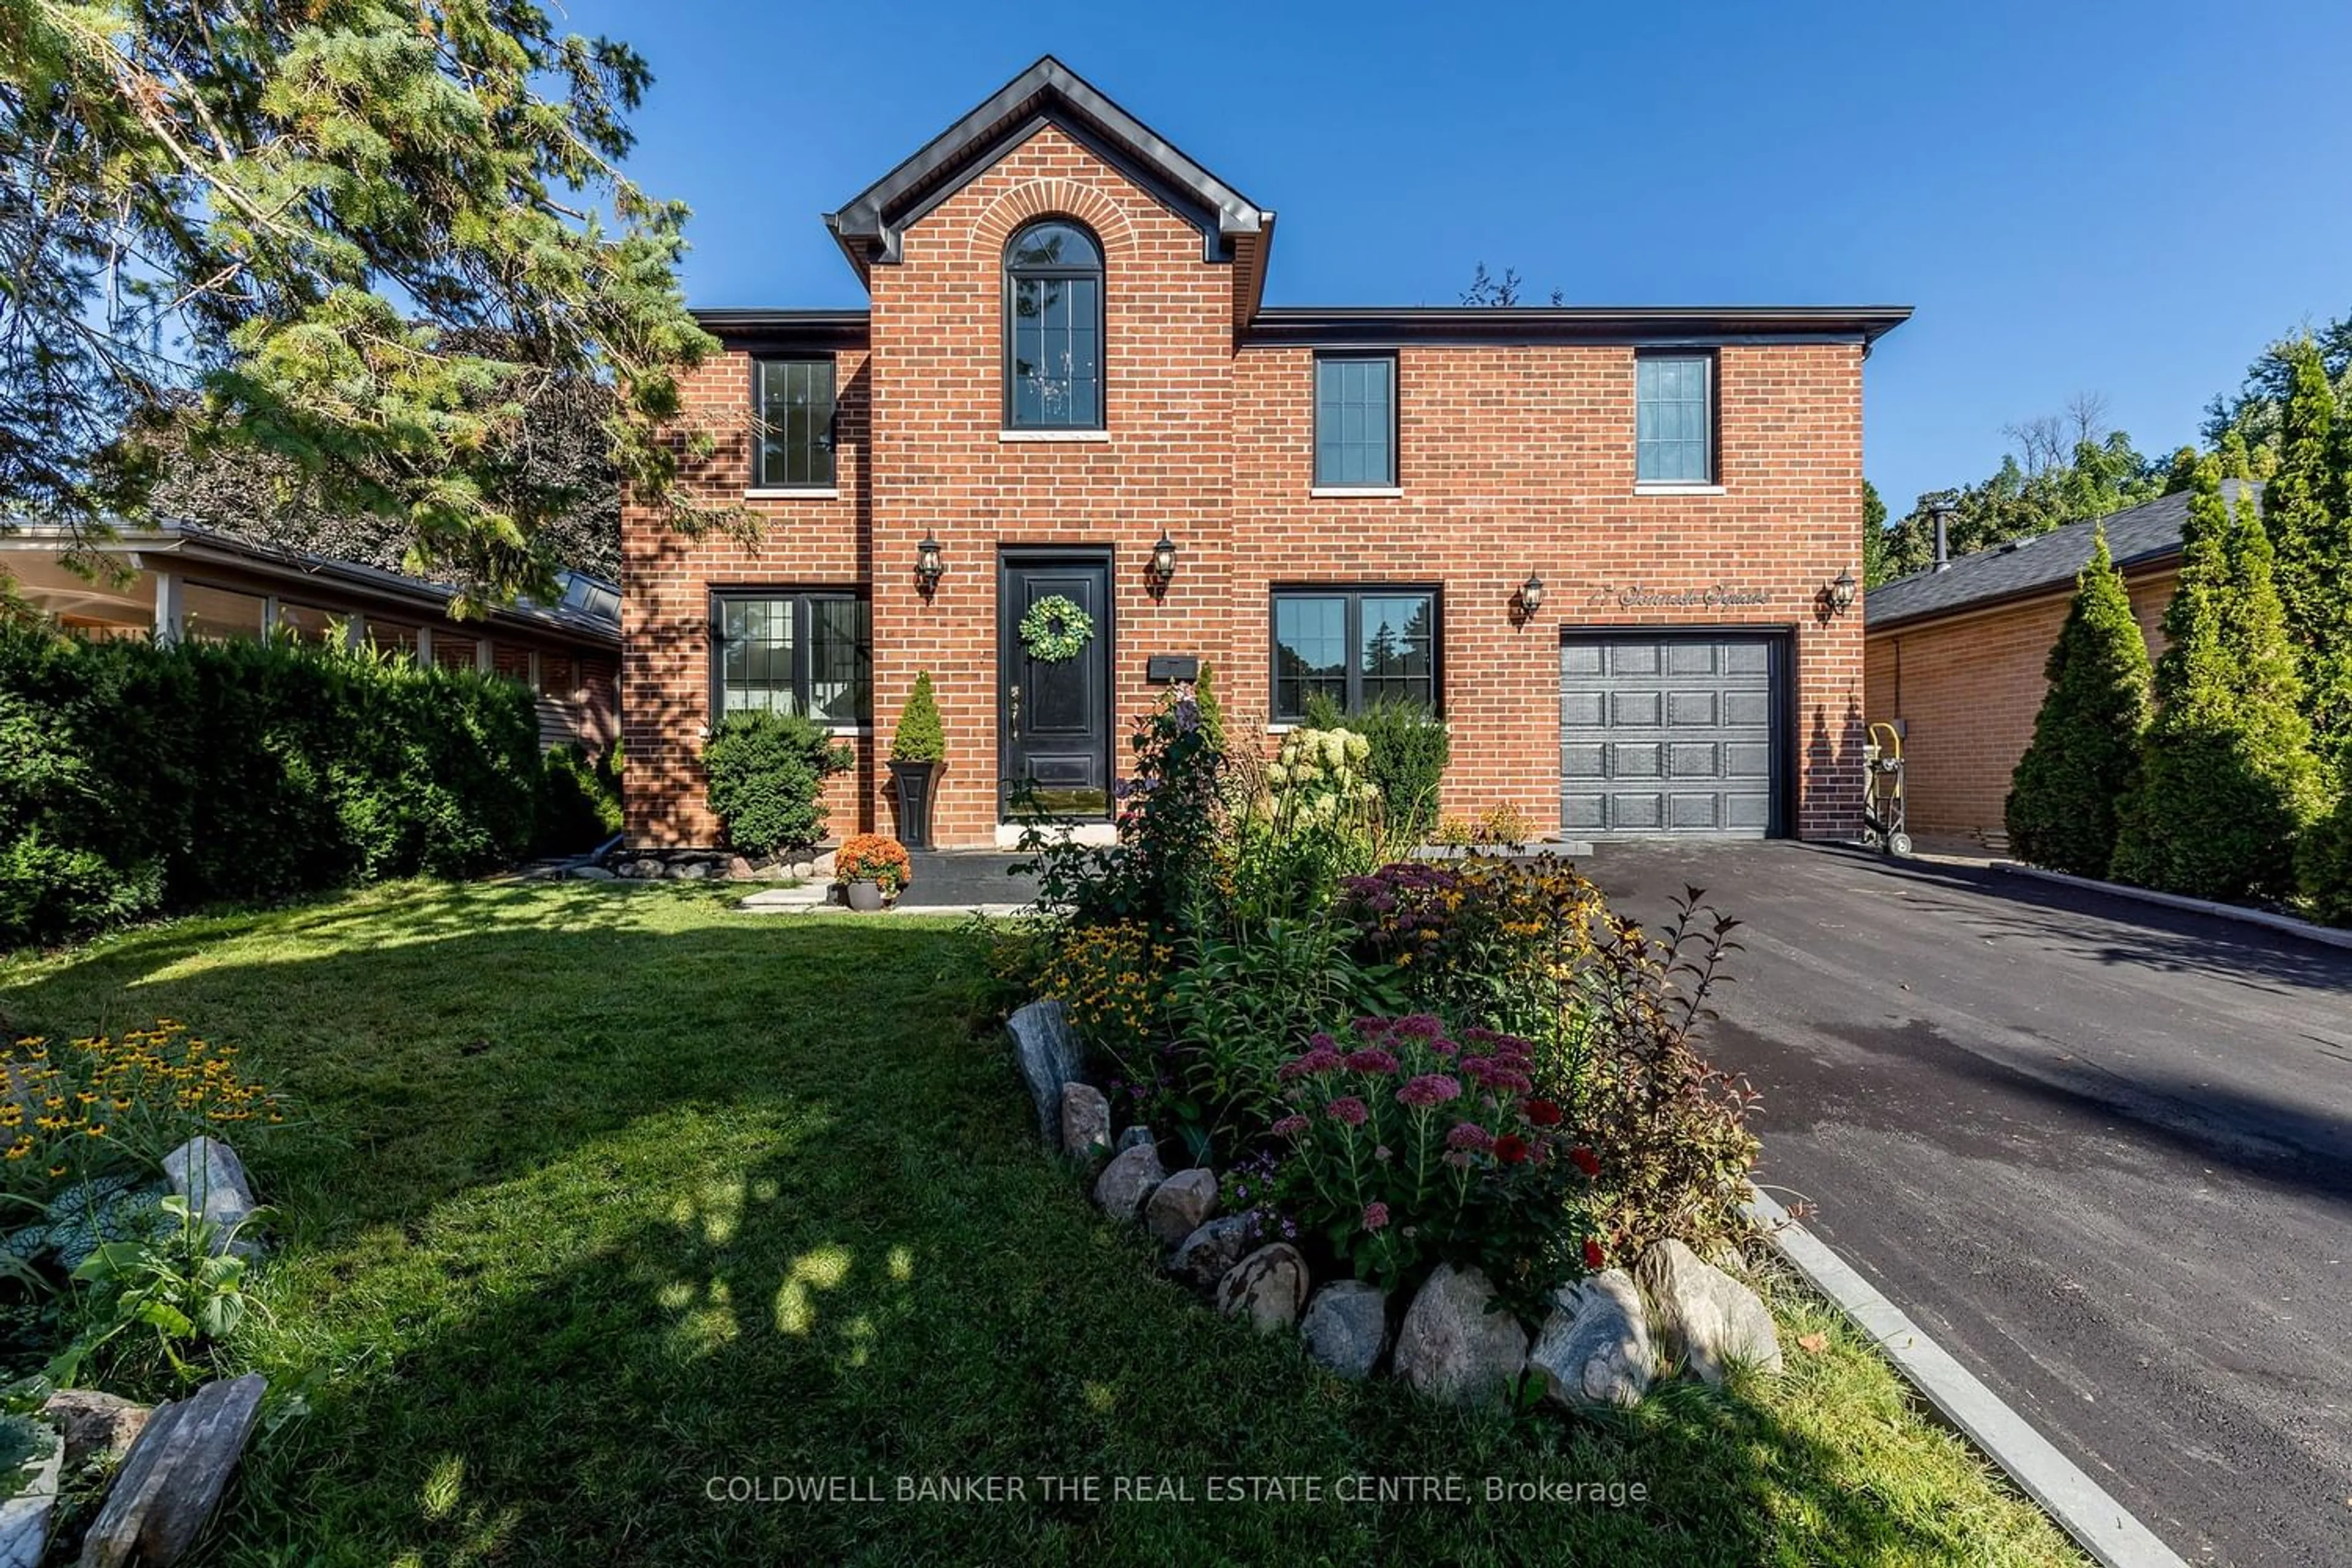 Home with brick exterior material for 17 Sonneck Sq, Toronto Ontario M1E 1A8